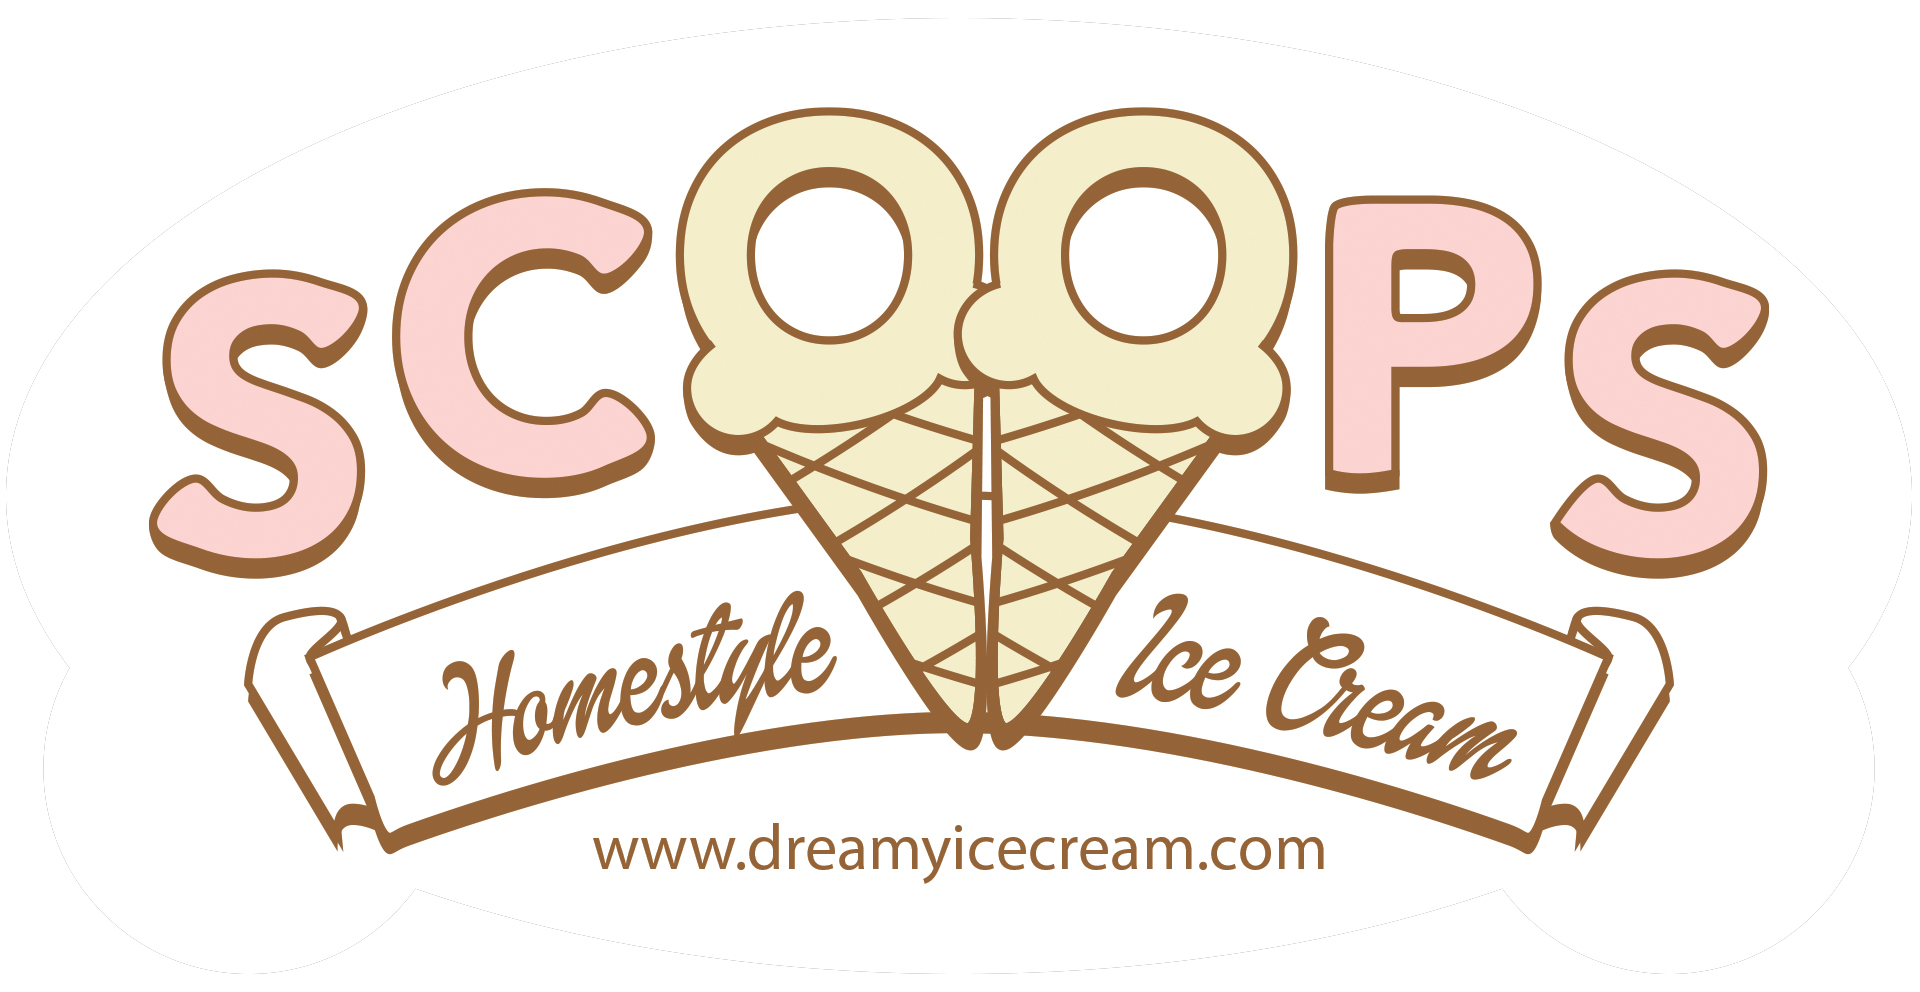 Scoops logo